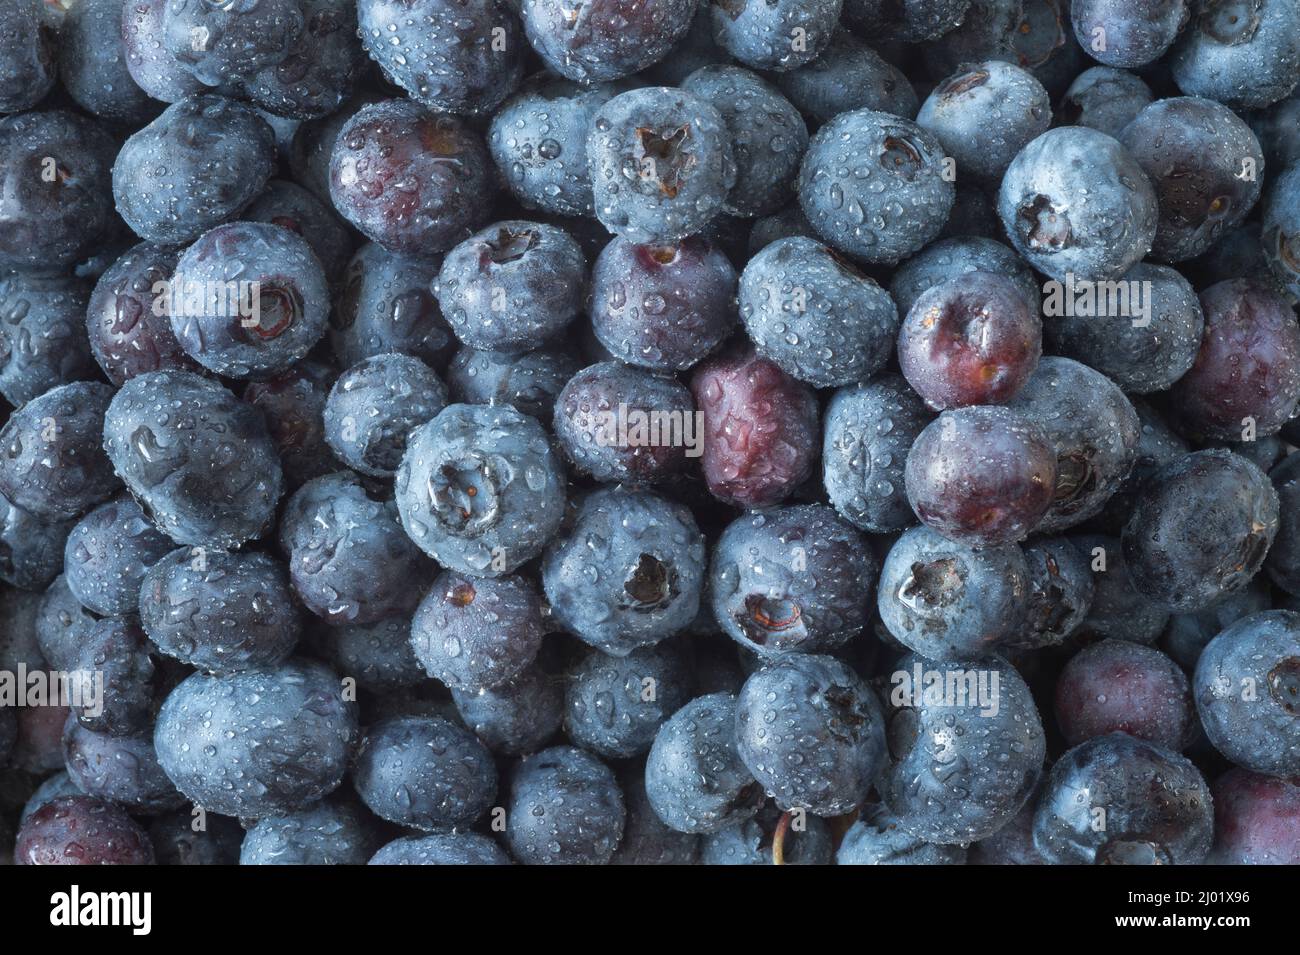 Raindrops on Blueberries (Vaccinium sp.) Stock Photo